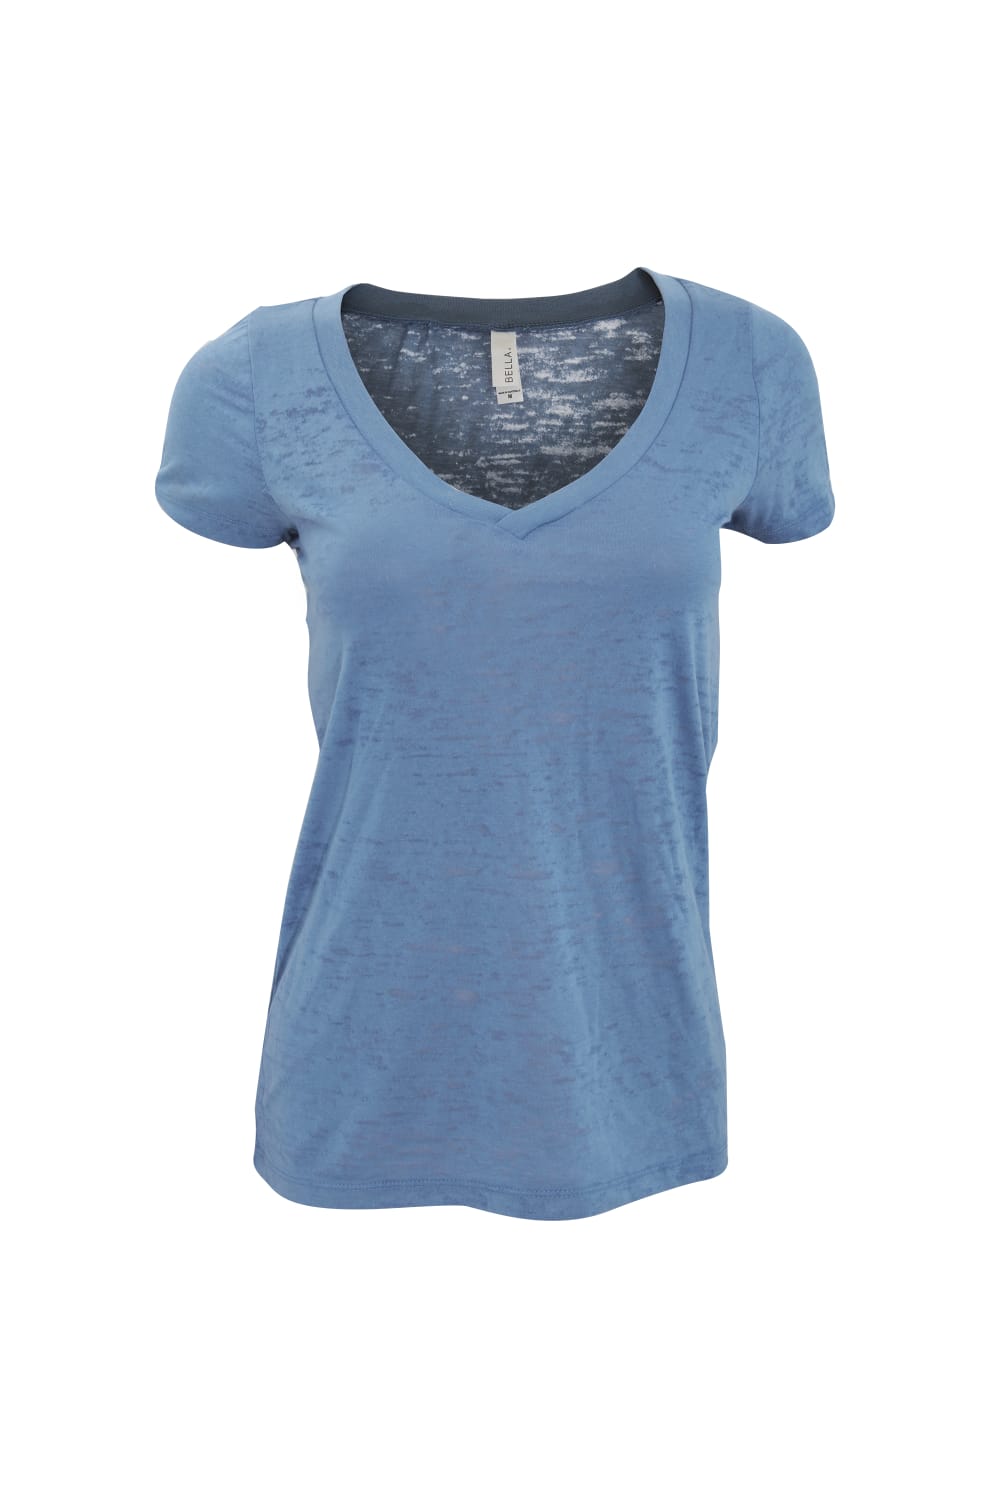 Bella + Canvas Womens/Ladies Burnout V-Neck Short Sleeve T-Shirt (Steel Blue)